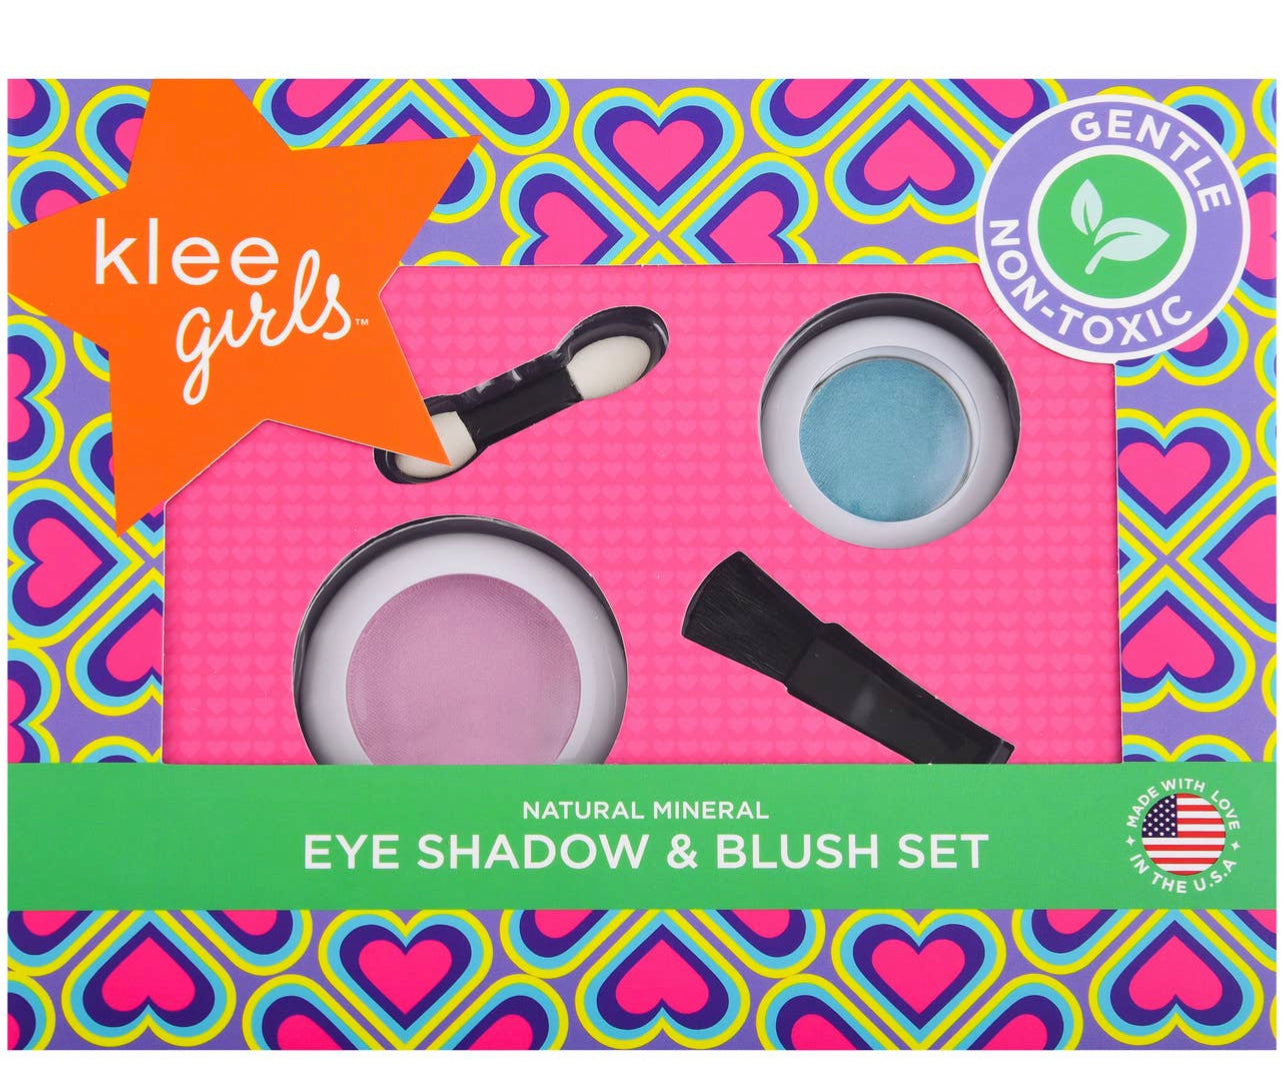 Wink and Smile - Klee Girls Natural Mineral 2PC Makeup Kit